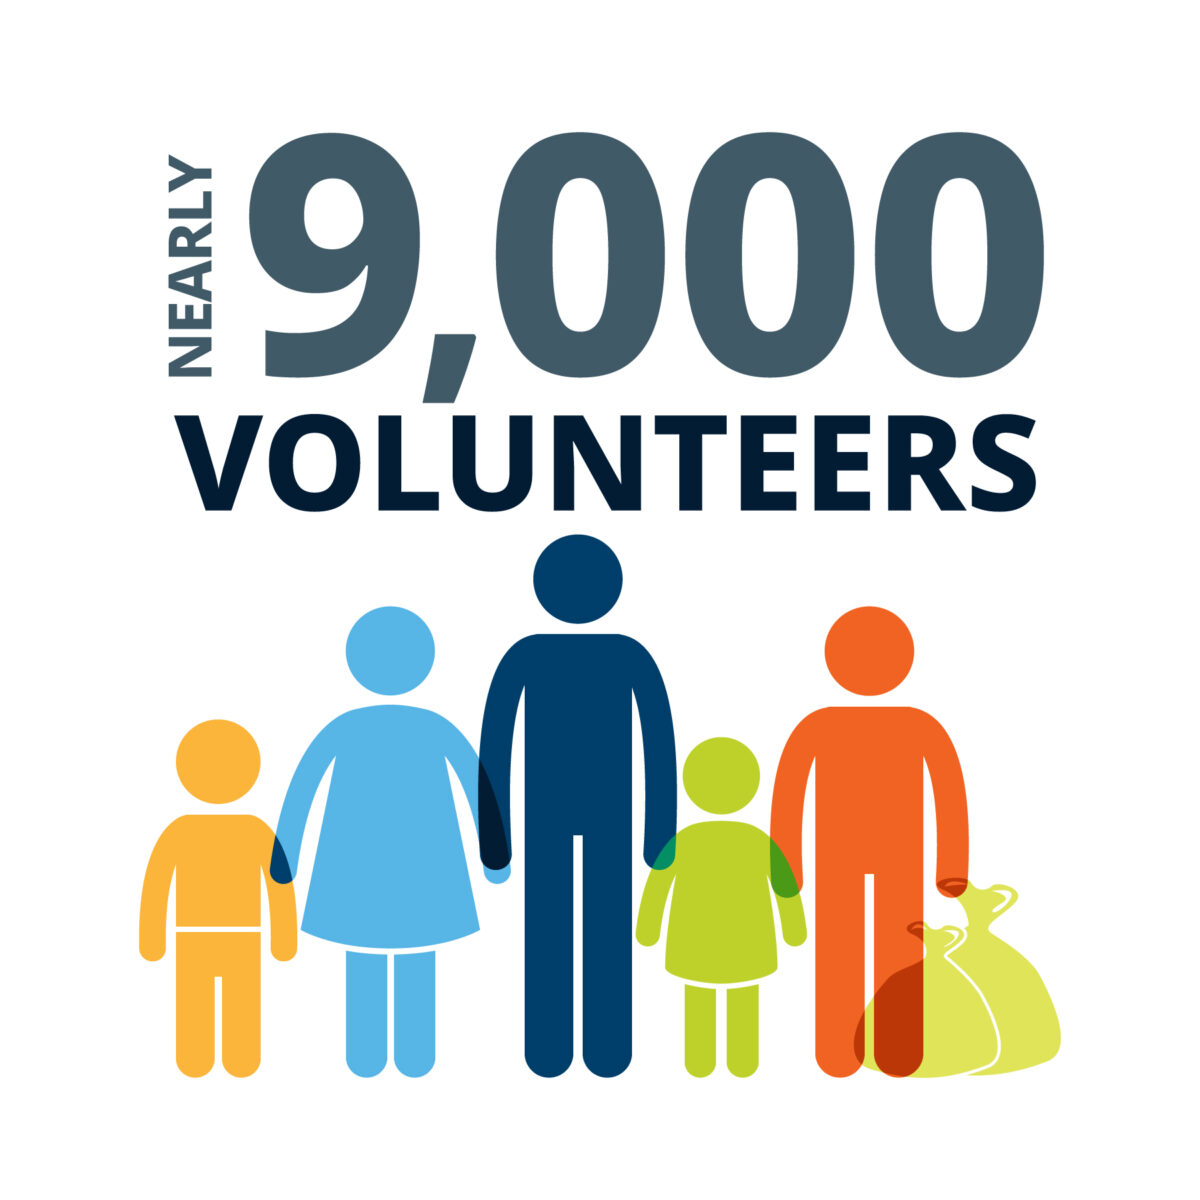 Nearly 9,000 volunteers.